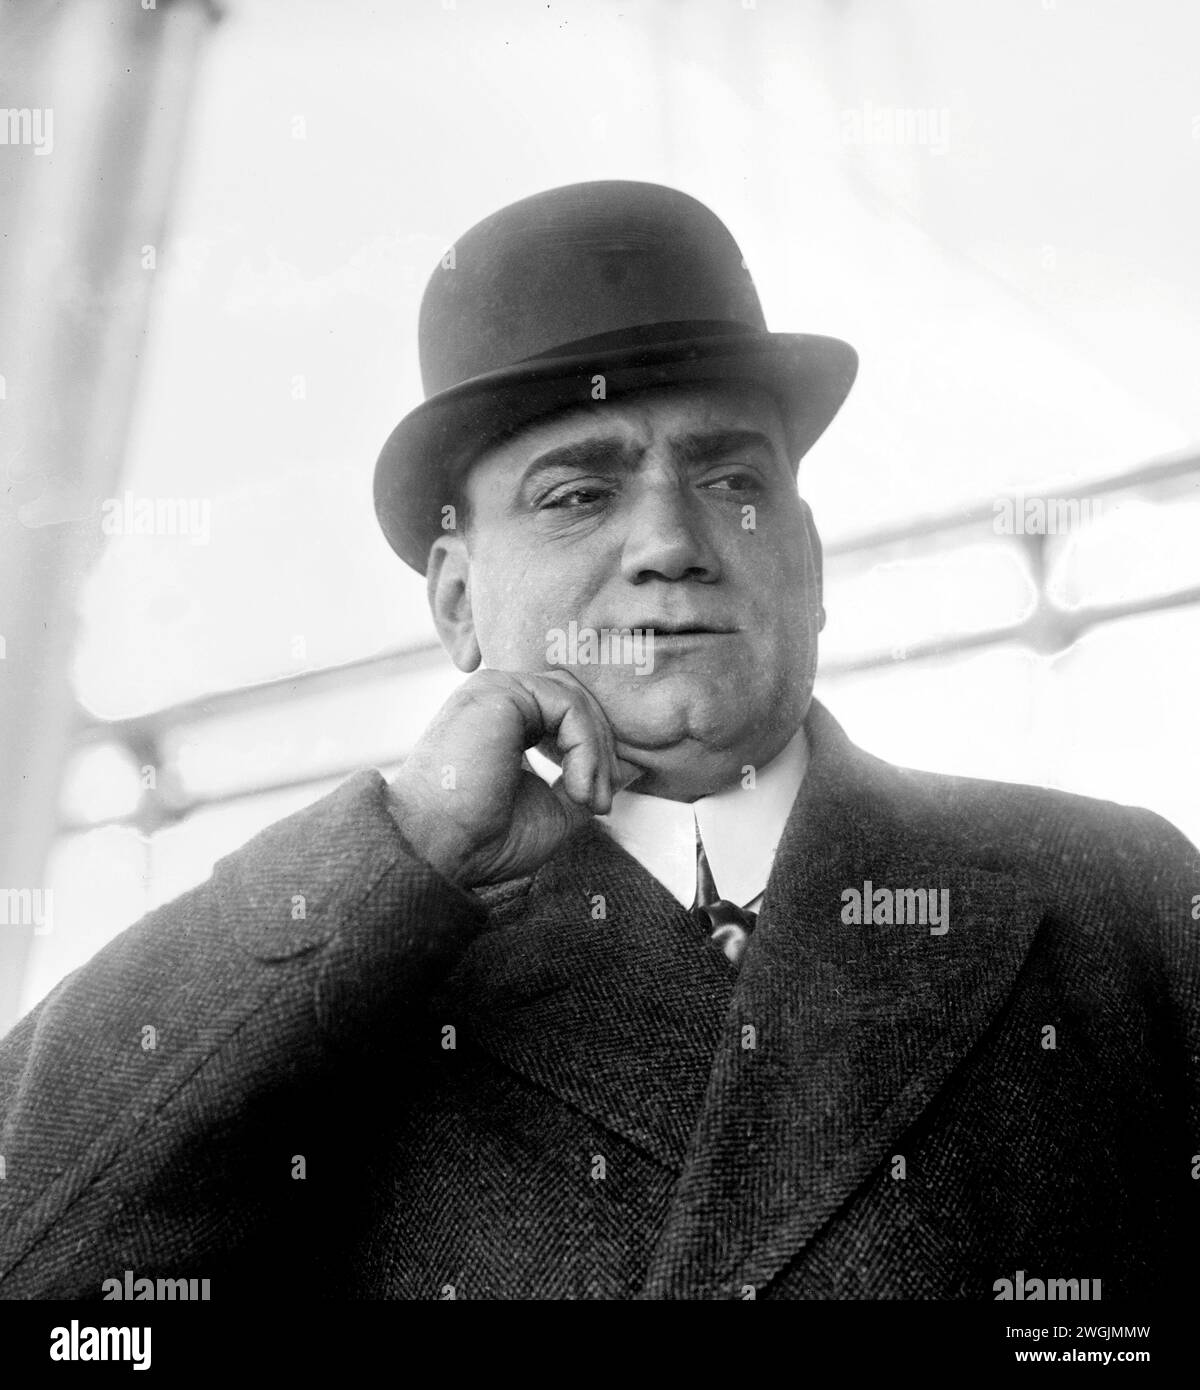 Enrico Caruso. Portrai du ténor italien Enrico Caruso (1873-1921) c. 1911 Banque D'Images